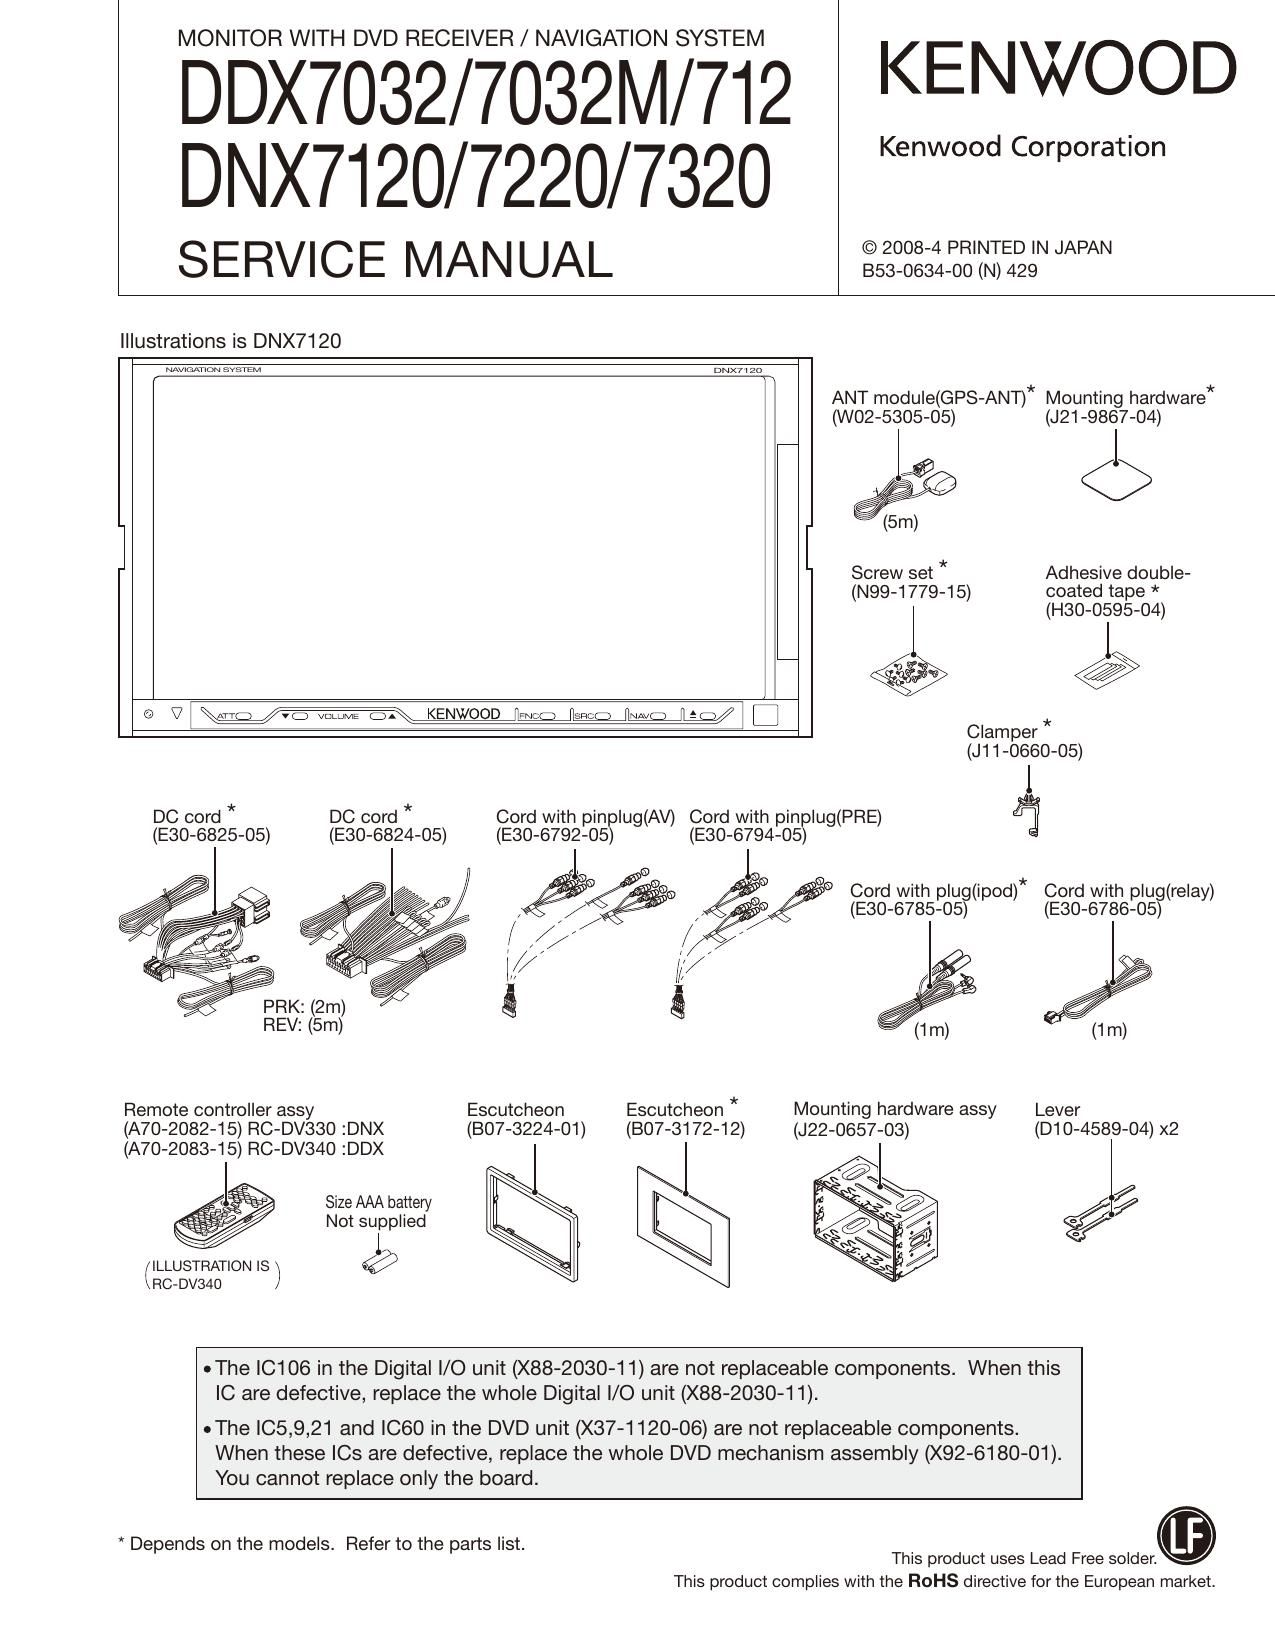 Kenwood DDX 7032 HU Service Manual